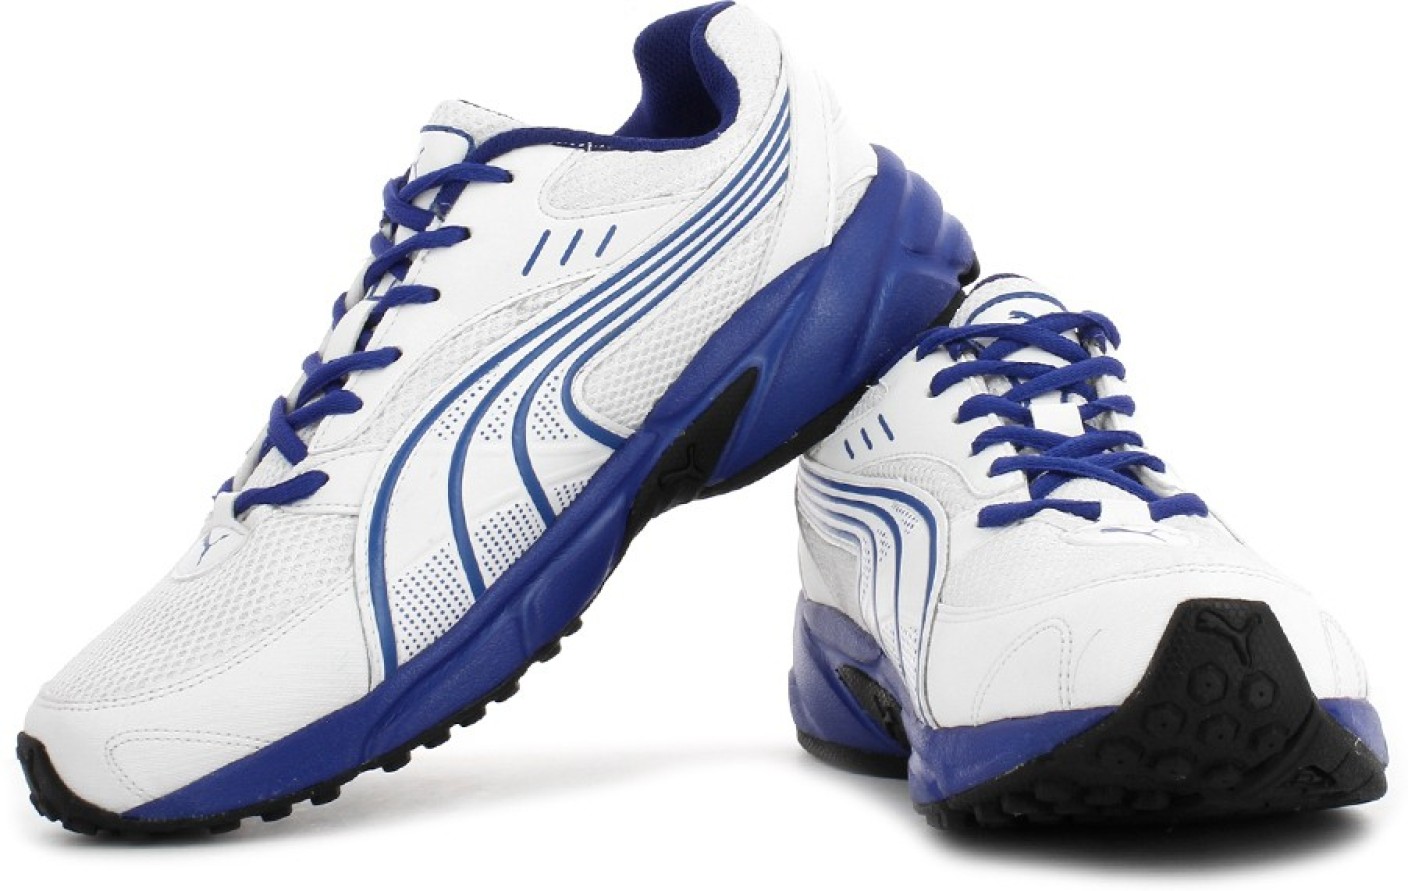 Puma Atom Fashion DP Running Shoes For Men - Buy White, Snorkel Blue ...